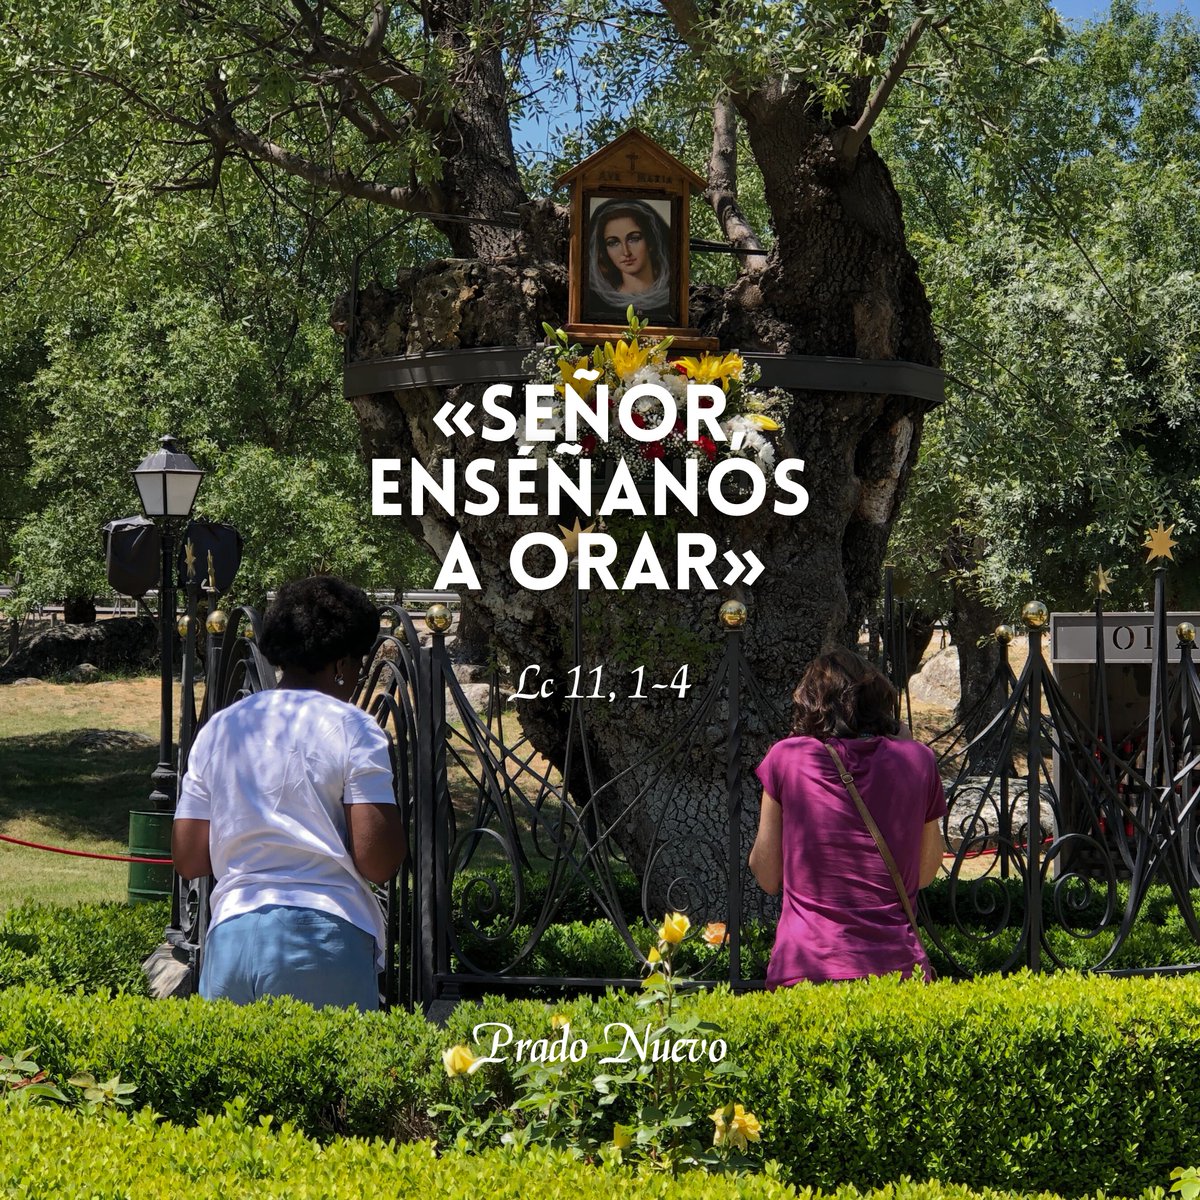 «Señor, enséñanos a orar» (Lc 11, 1-4).      

#EvangeliodeHoy #EvangeliodelDía #Oración #11deOctubre #Octubre #Miércoles #SanJuanXXIII #VirgendeBegoña